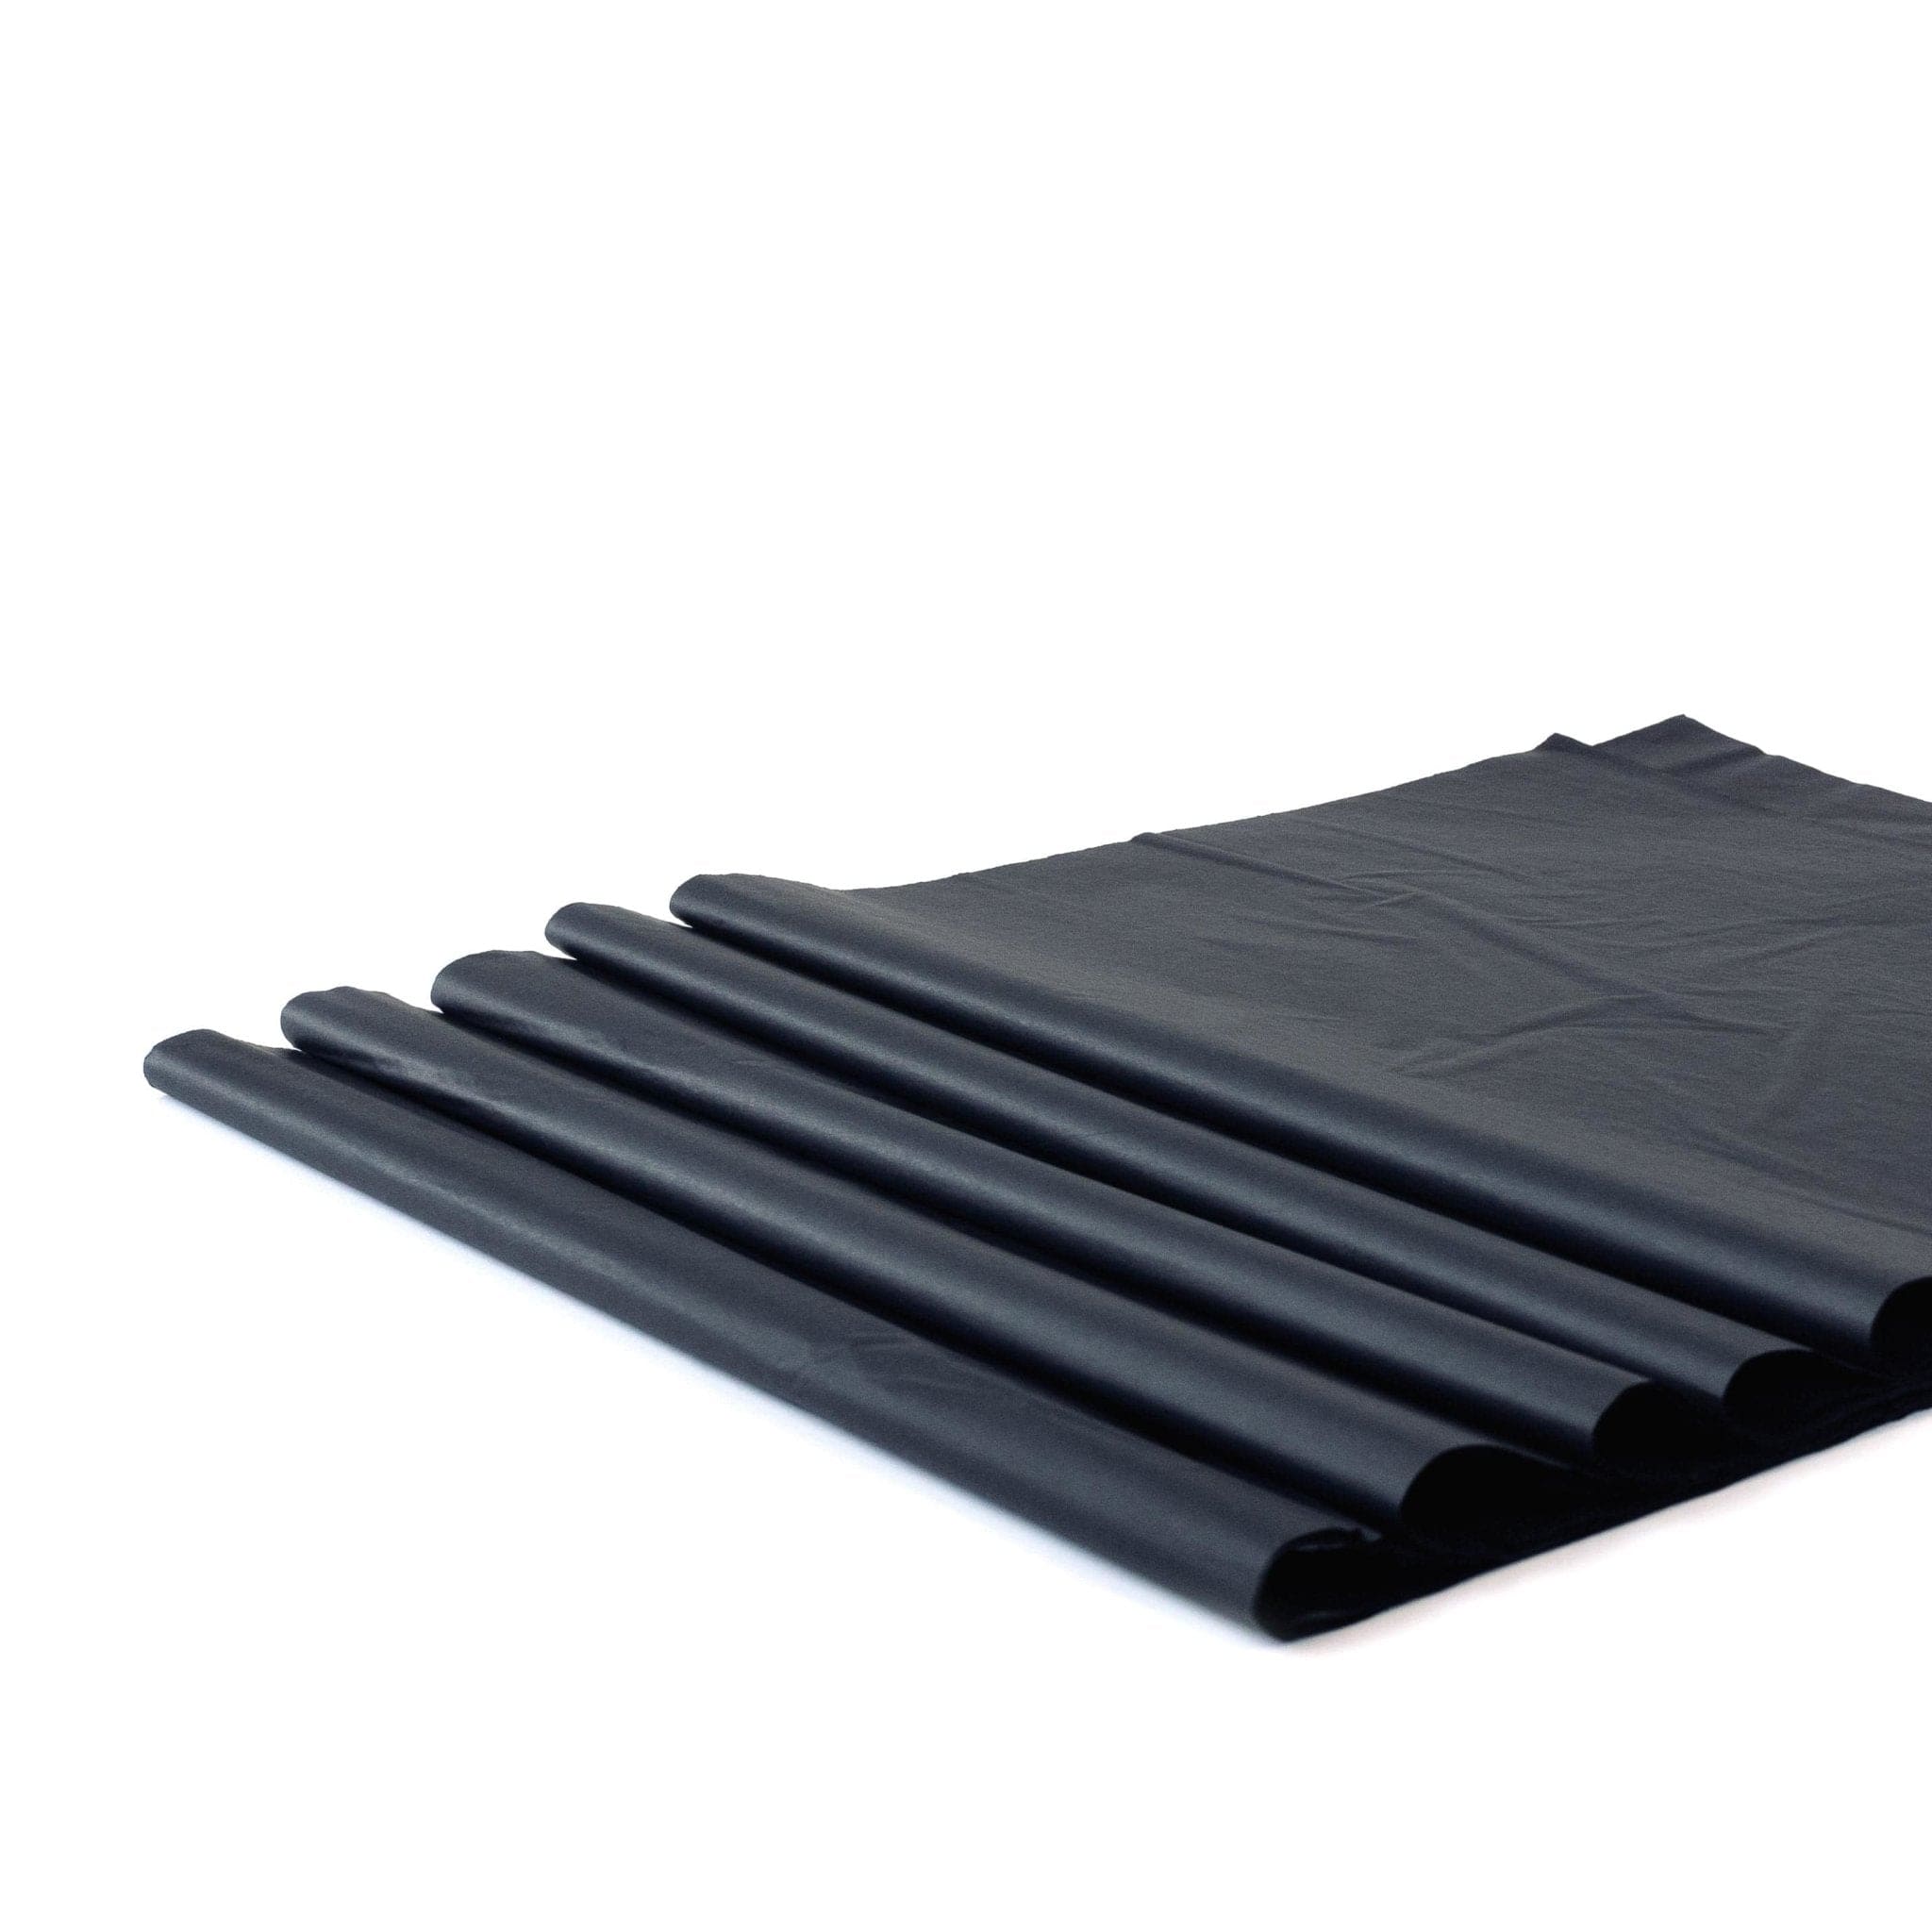 Black Tissue Paper - Acid Free & Fully Biodegradable